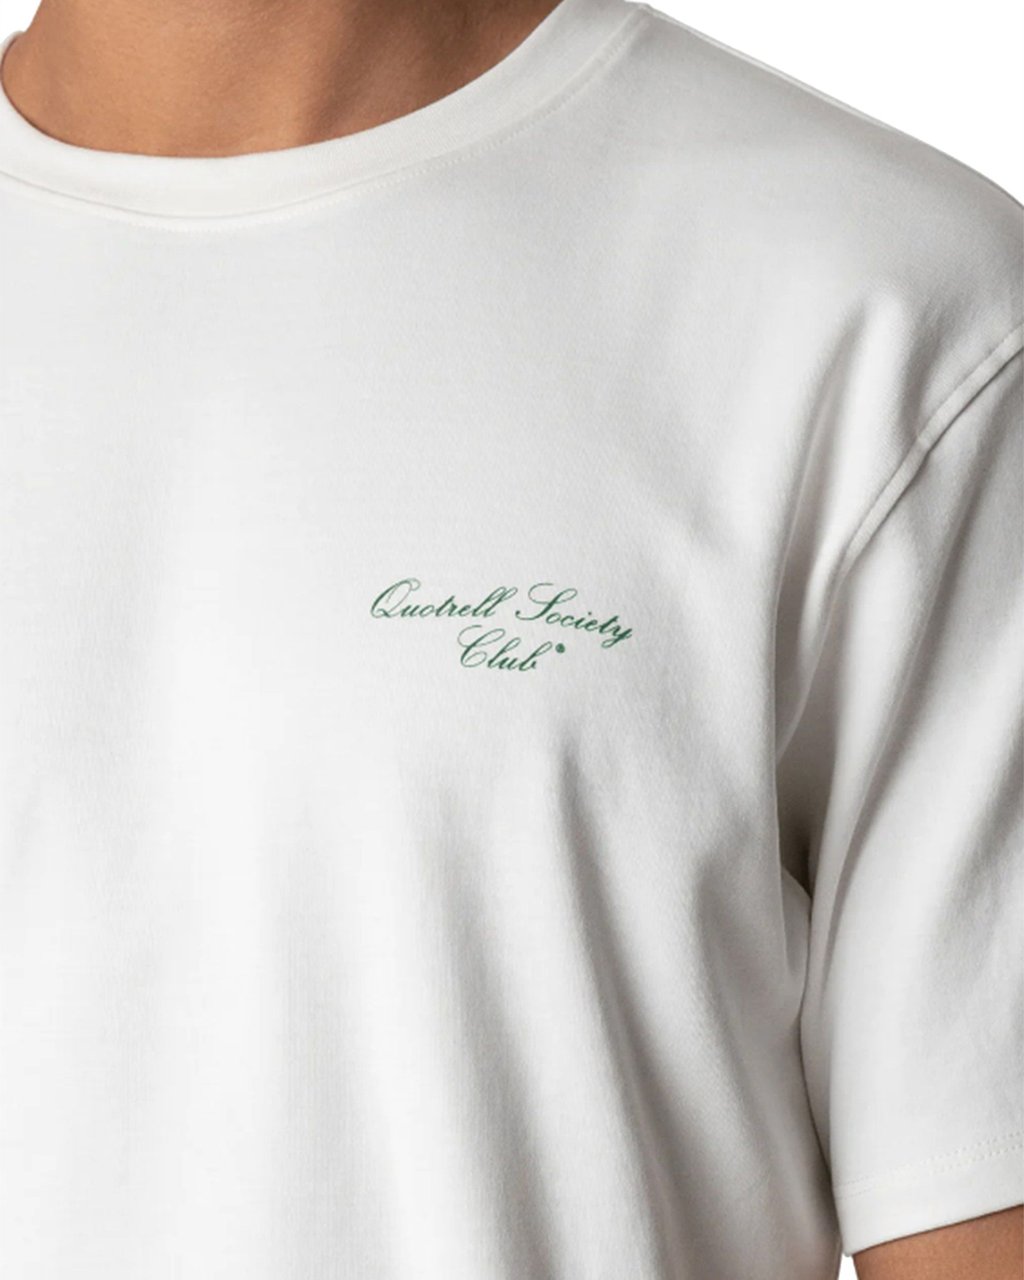 Quotrell Society Club T-shirt | White/cobalt Groen